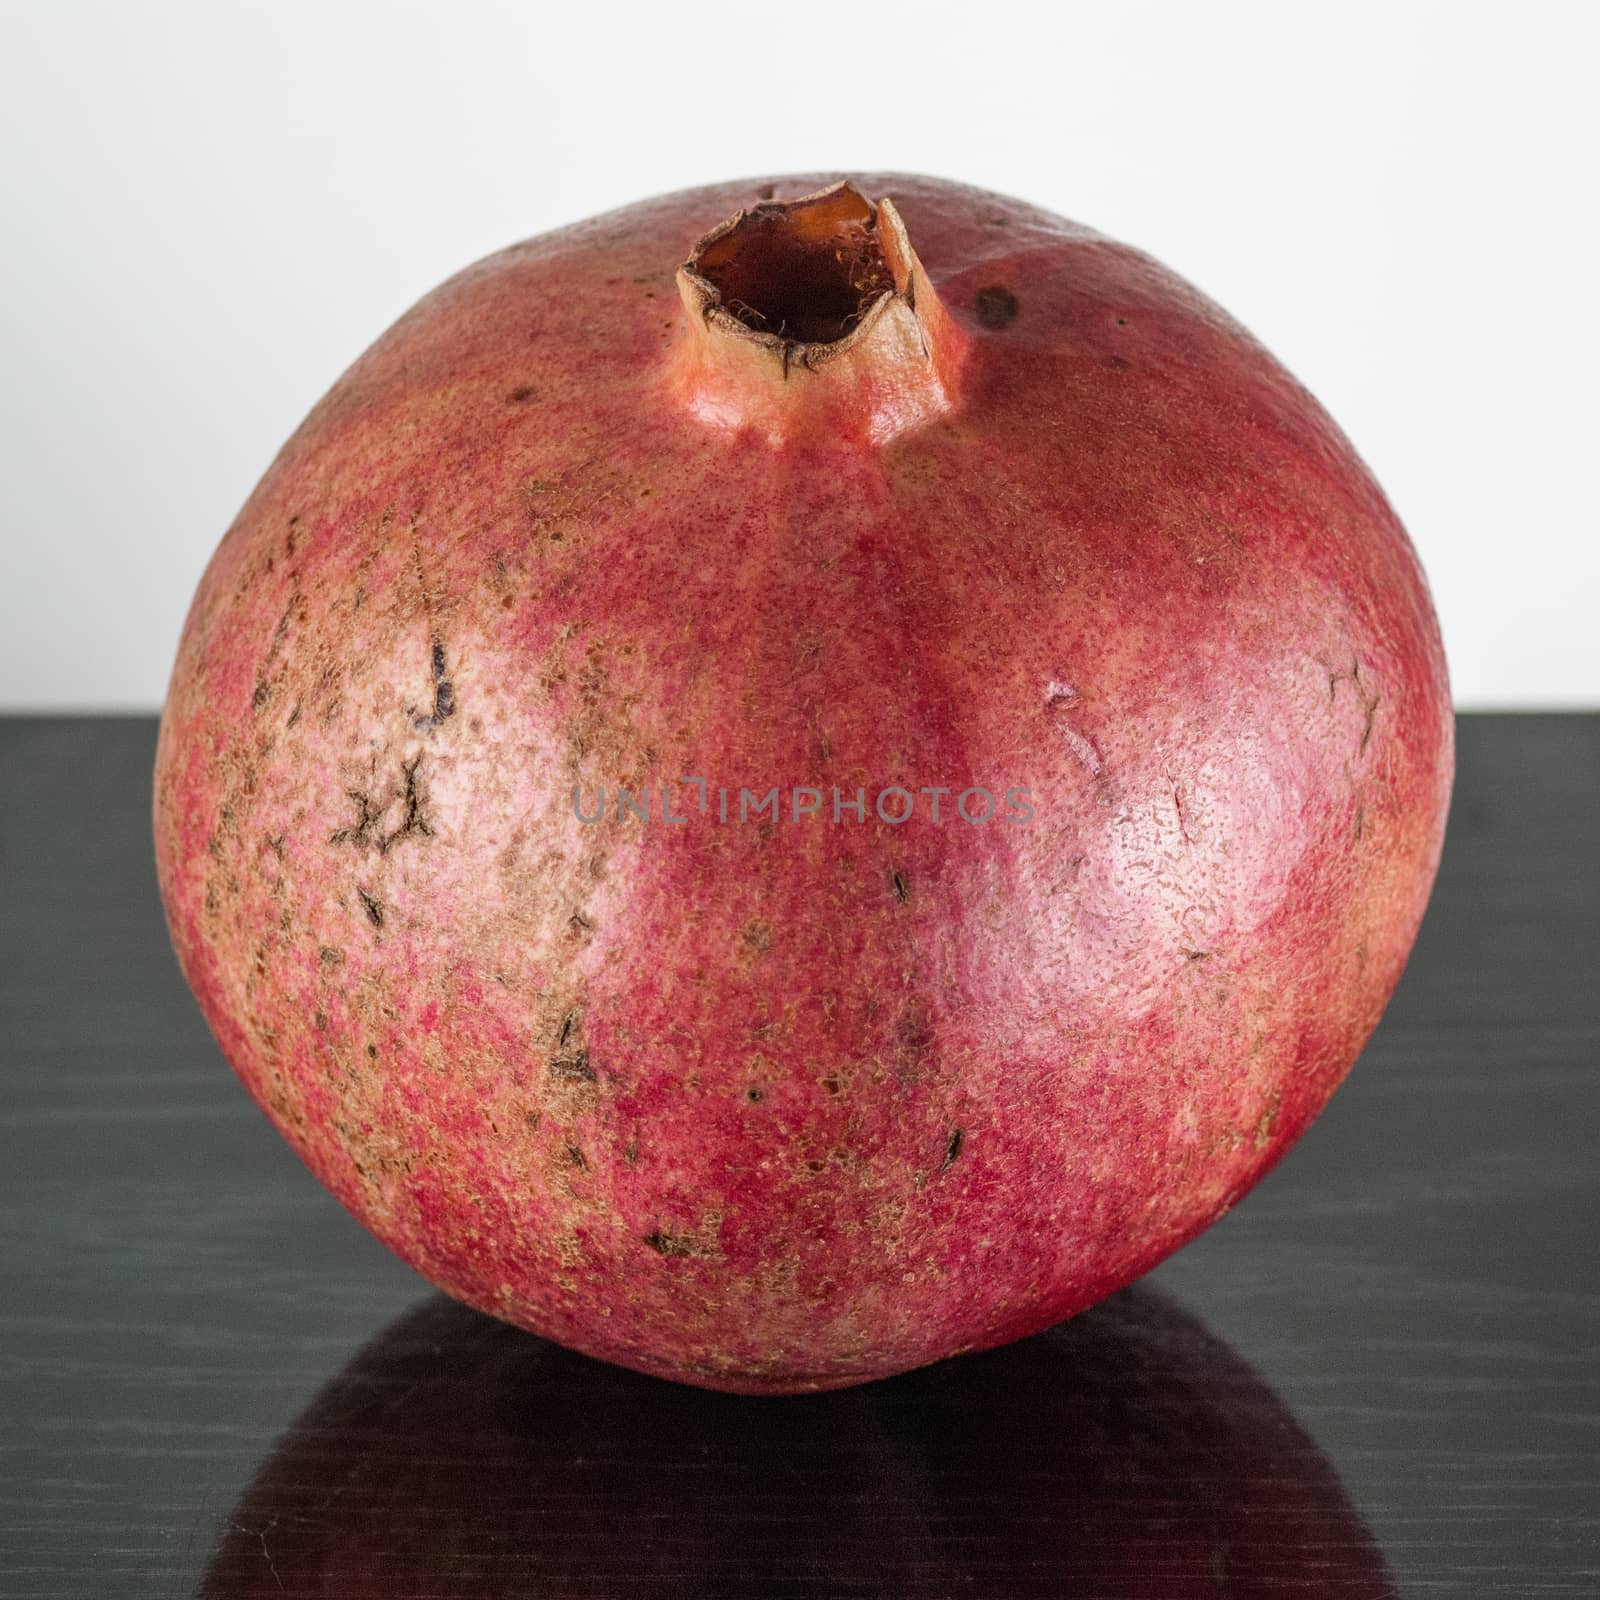  half ripe pomegranate fruit isolated on black wooden plane and white background.